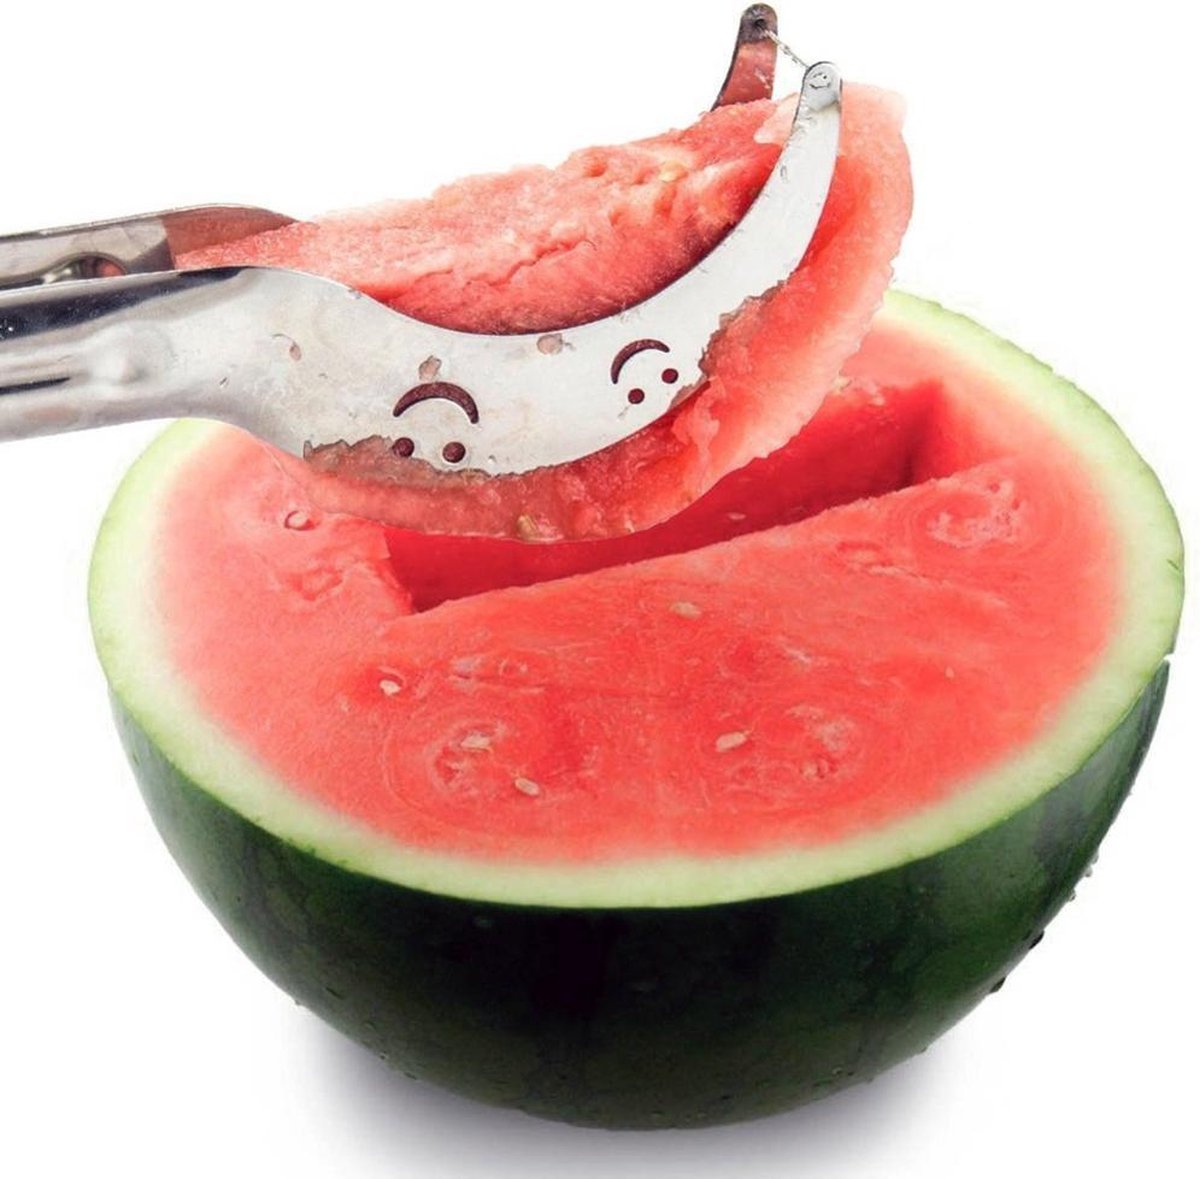 Watermelon cutter - Melon - Cutting - Stainless steel